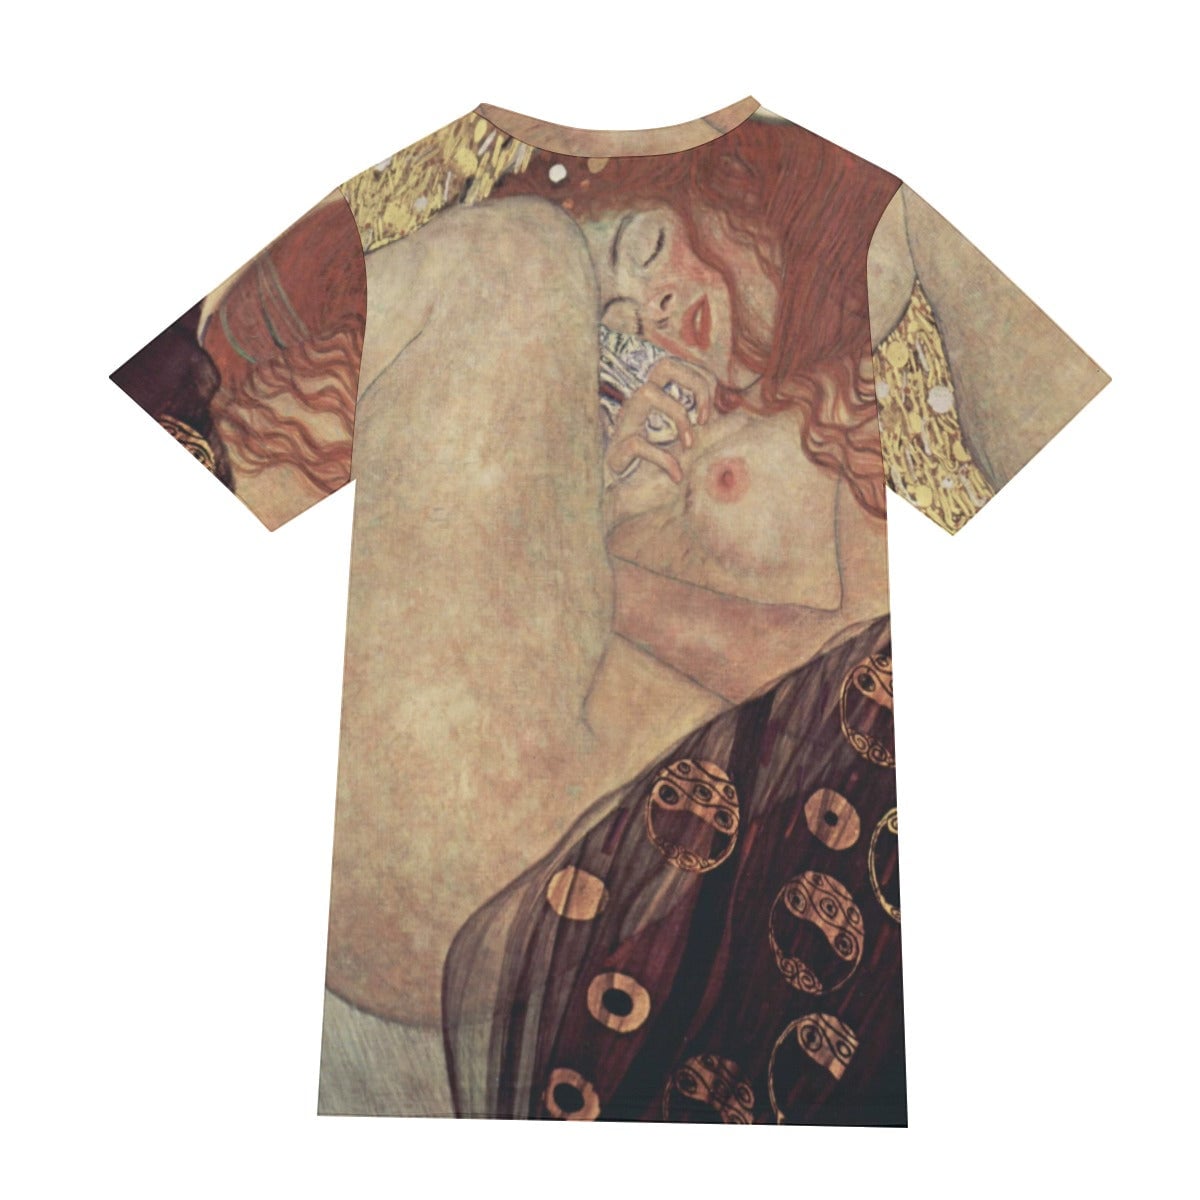 Gustav Klimt’s Danae T-Shirt - Famous Painting Art Tee